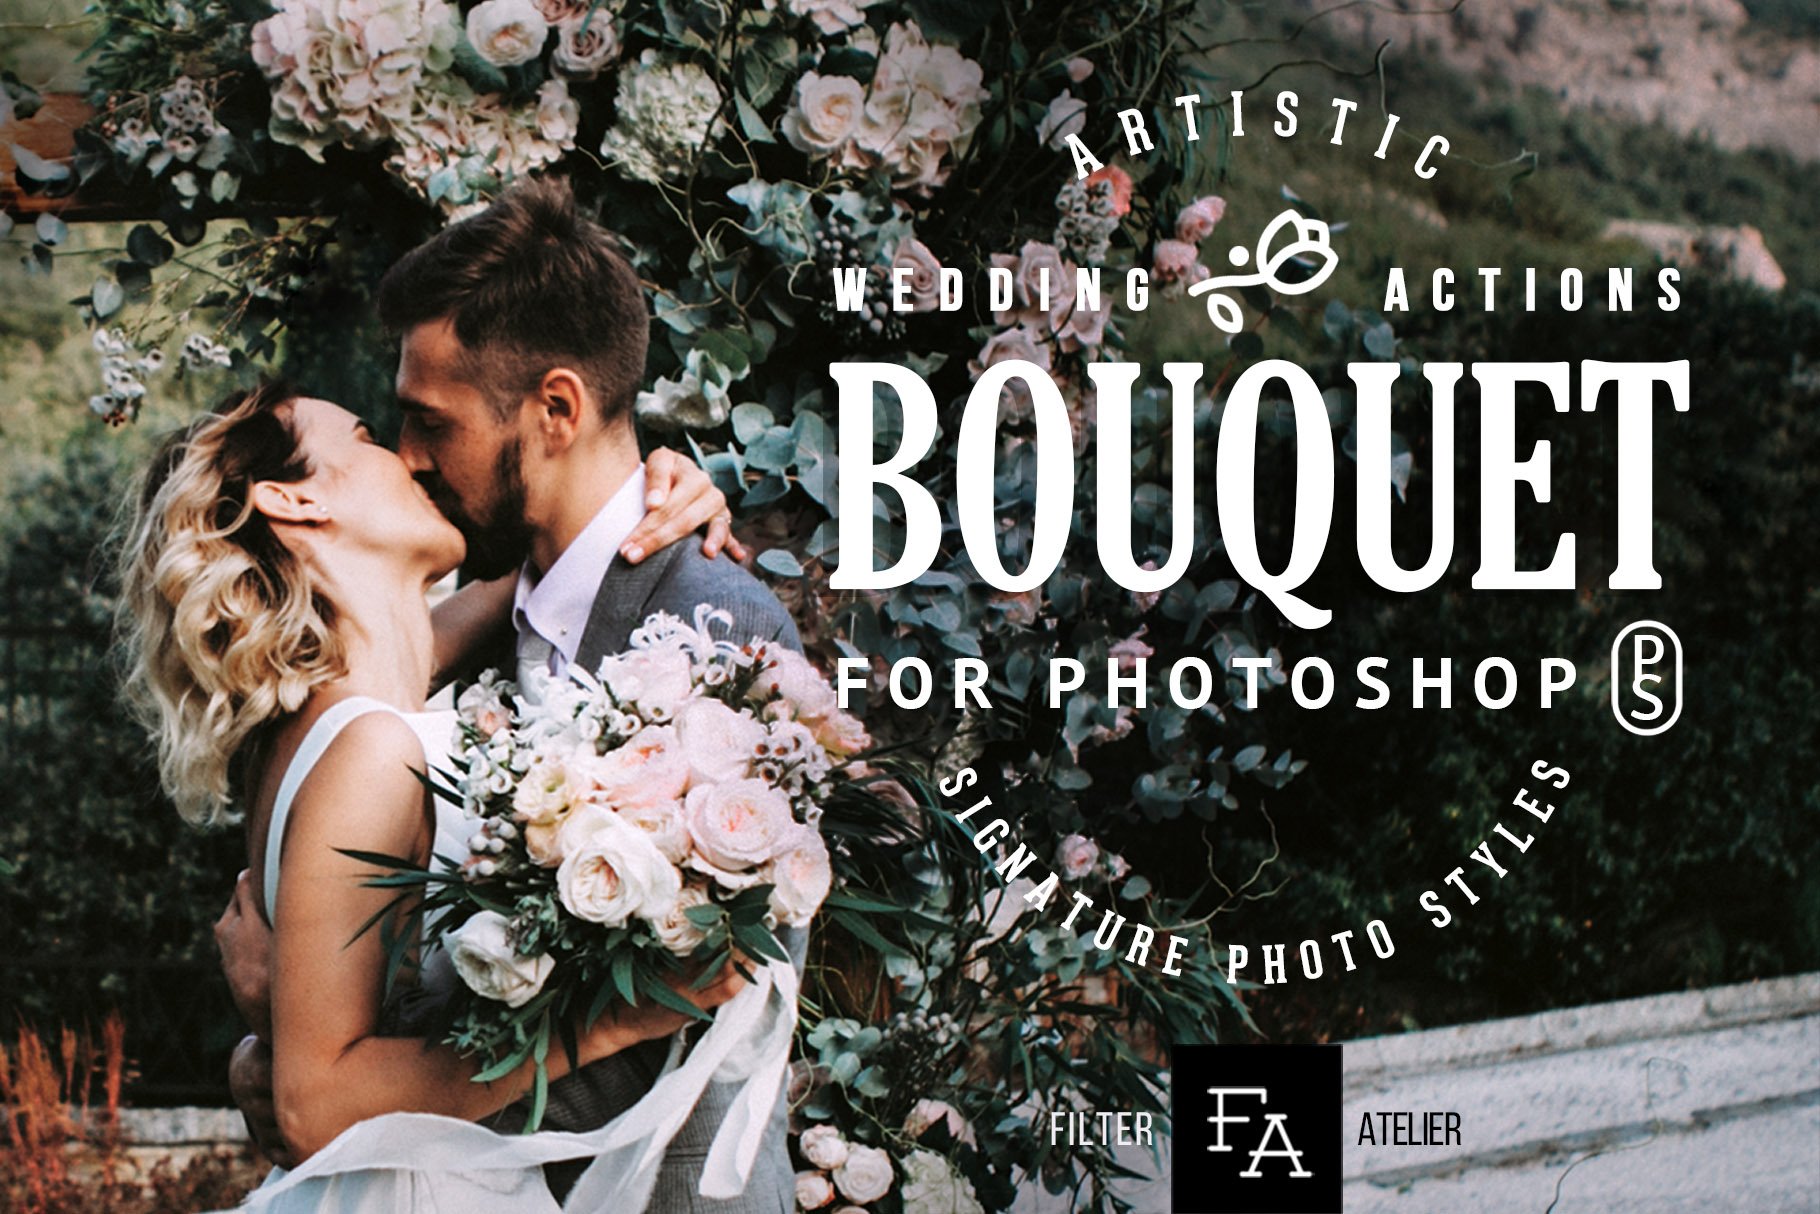 Bouquet Wedding Photoshop Actionscover image.